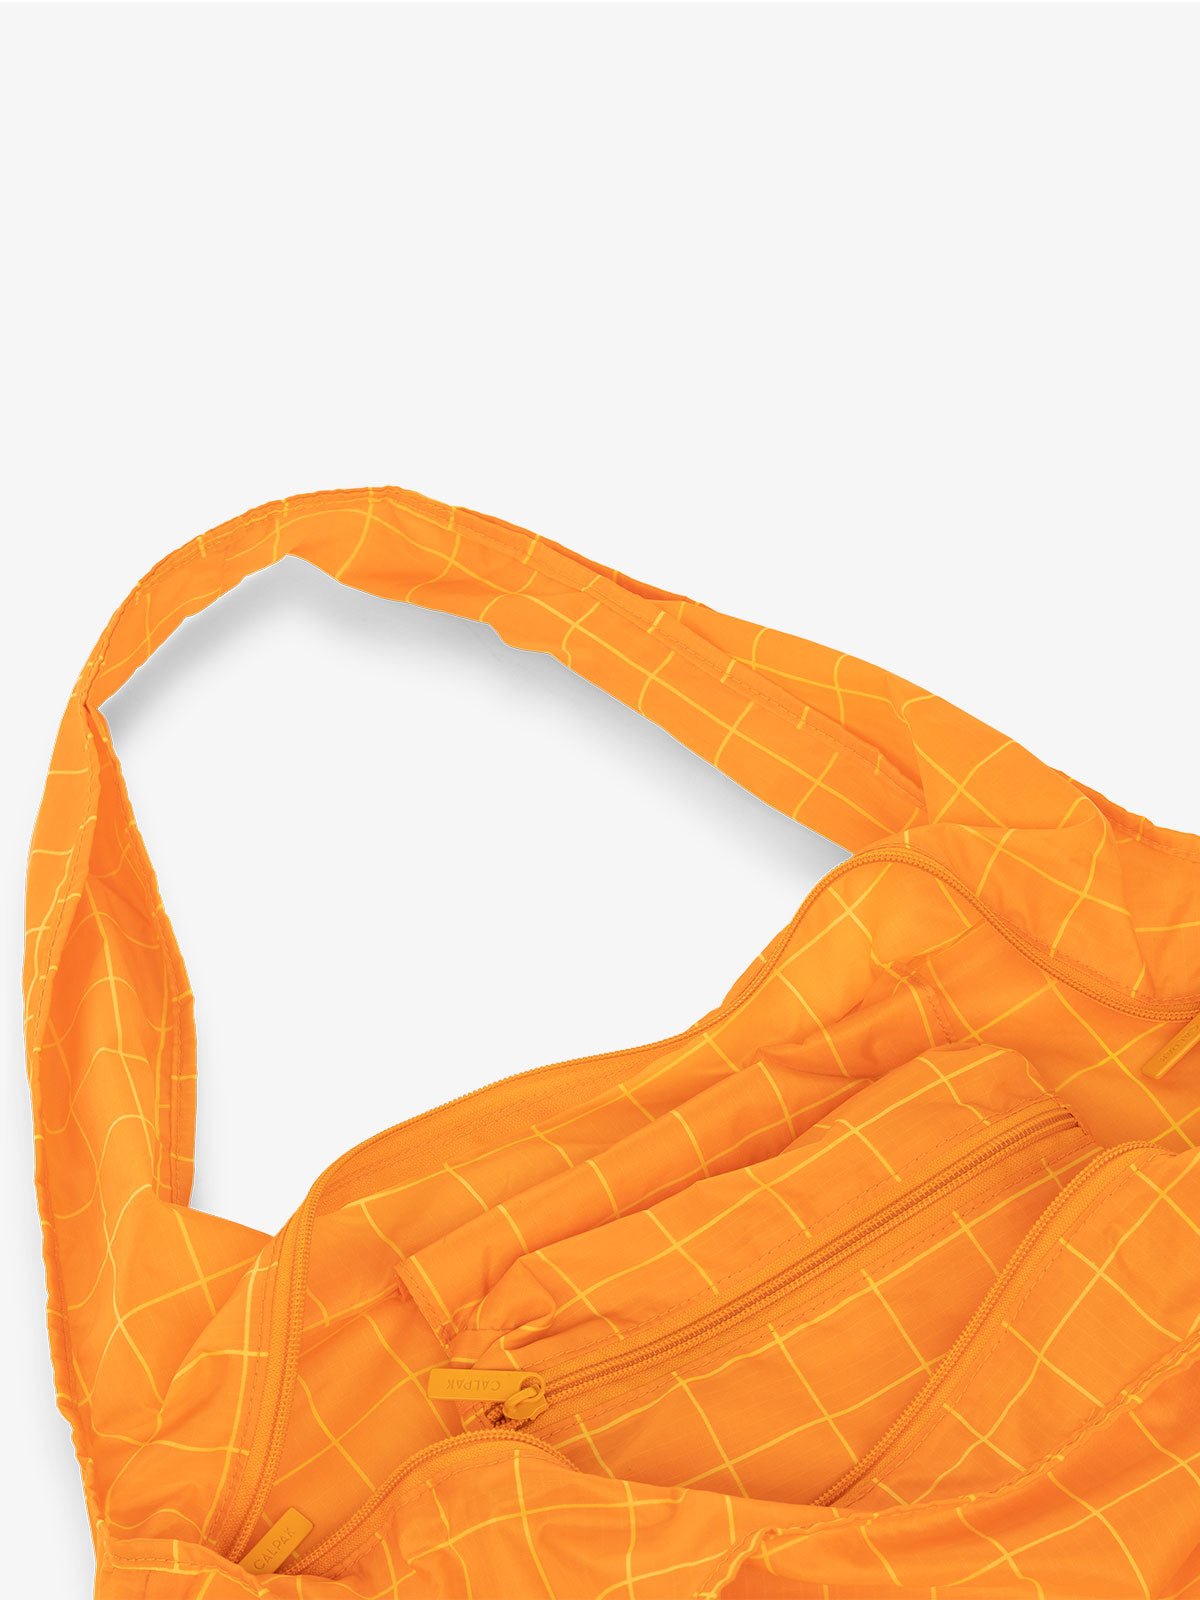 CALPAK Compakt shopping tote bag with interior zipper pocket in orange grid print